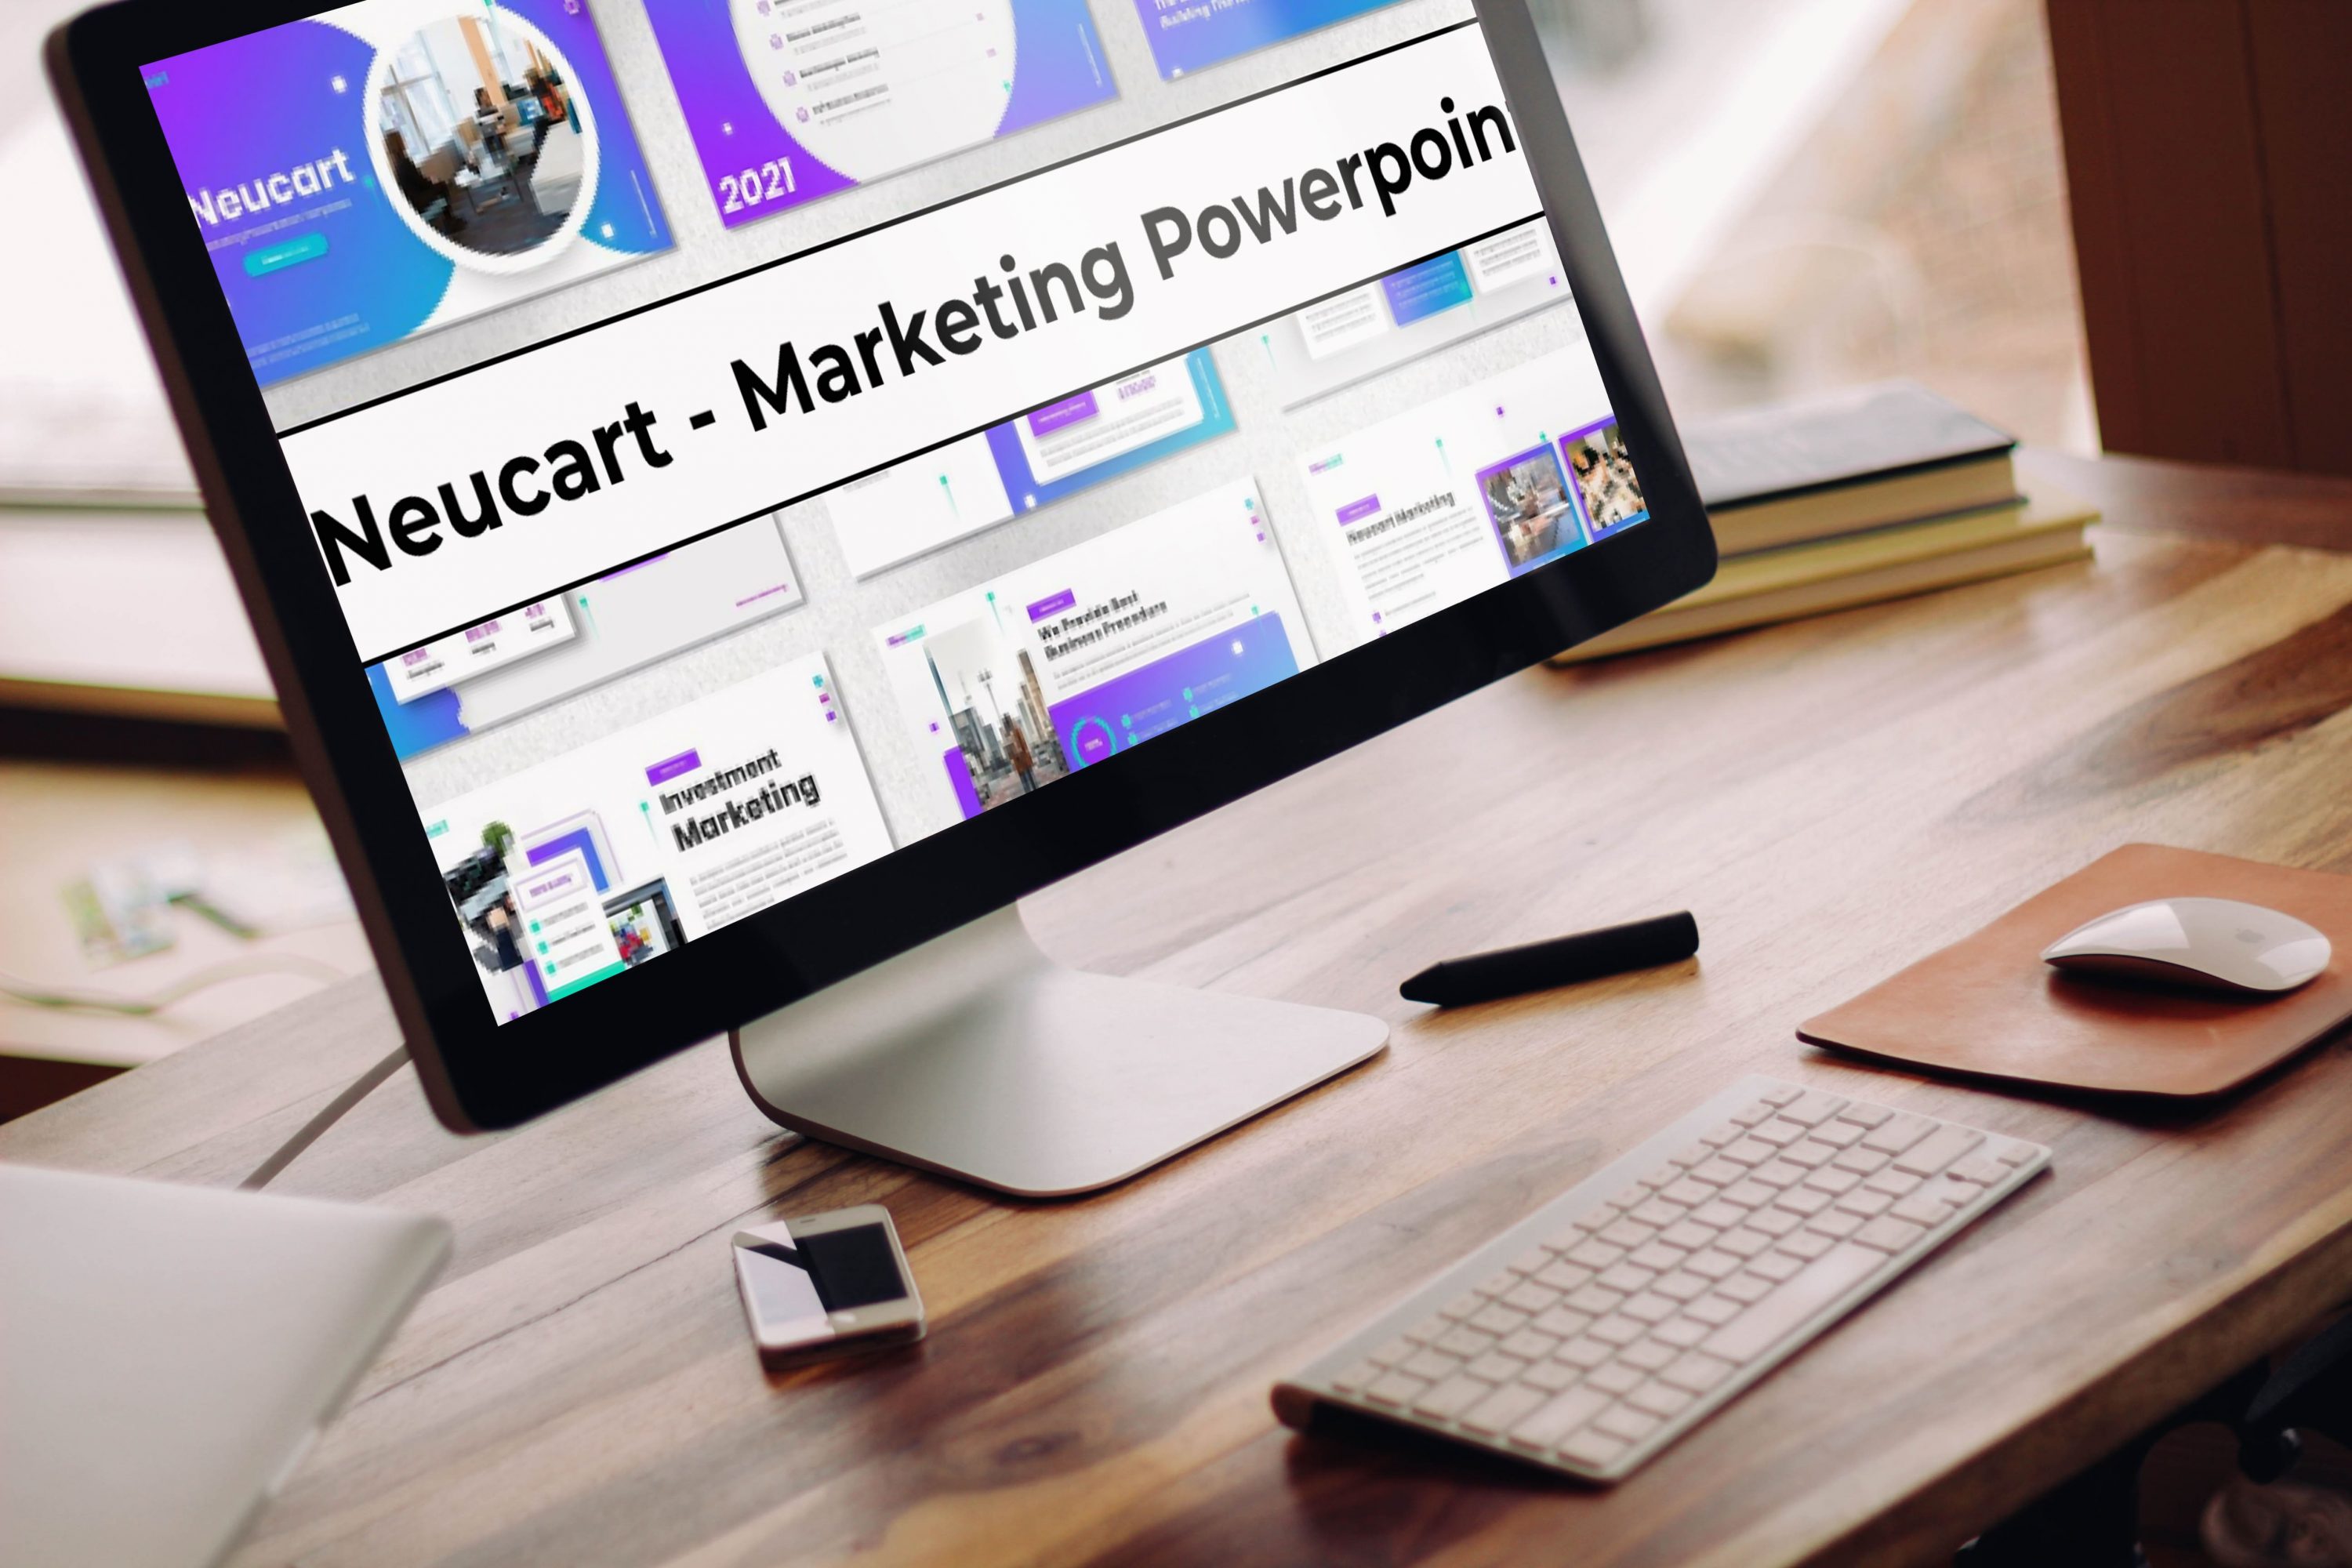 Desktop option of the Neucart - Marketing Powerpoint.